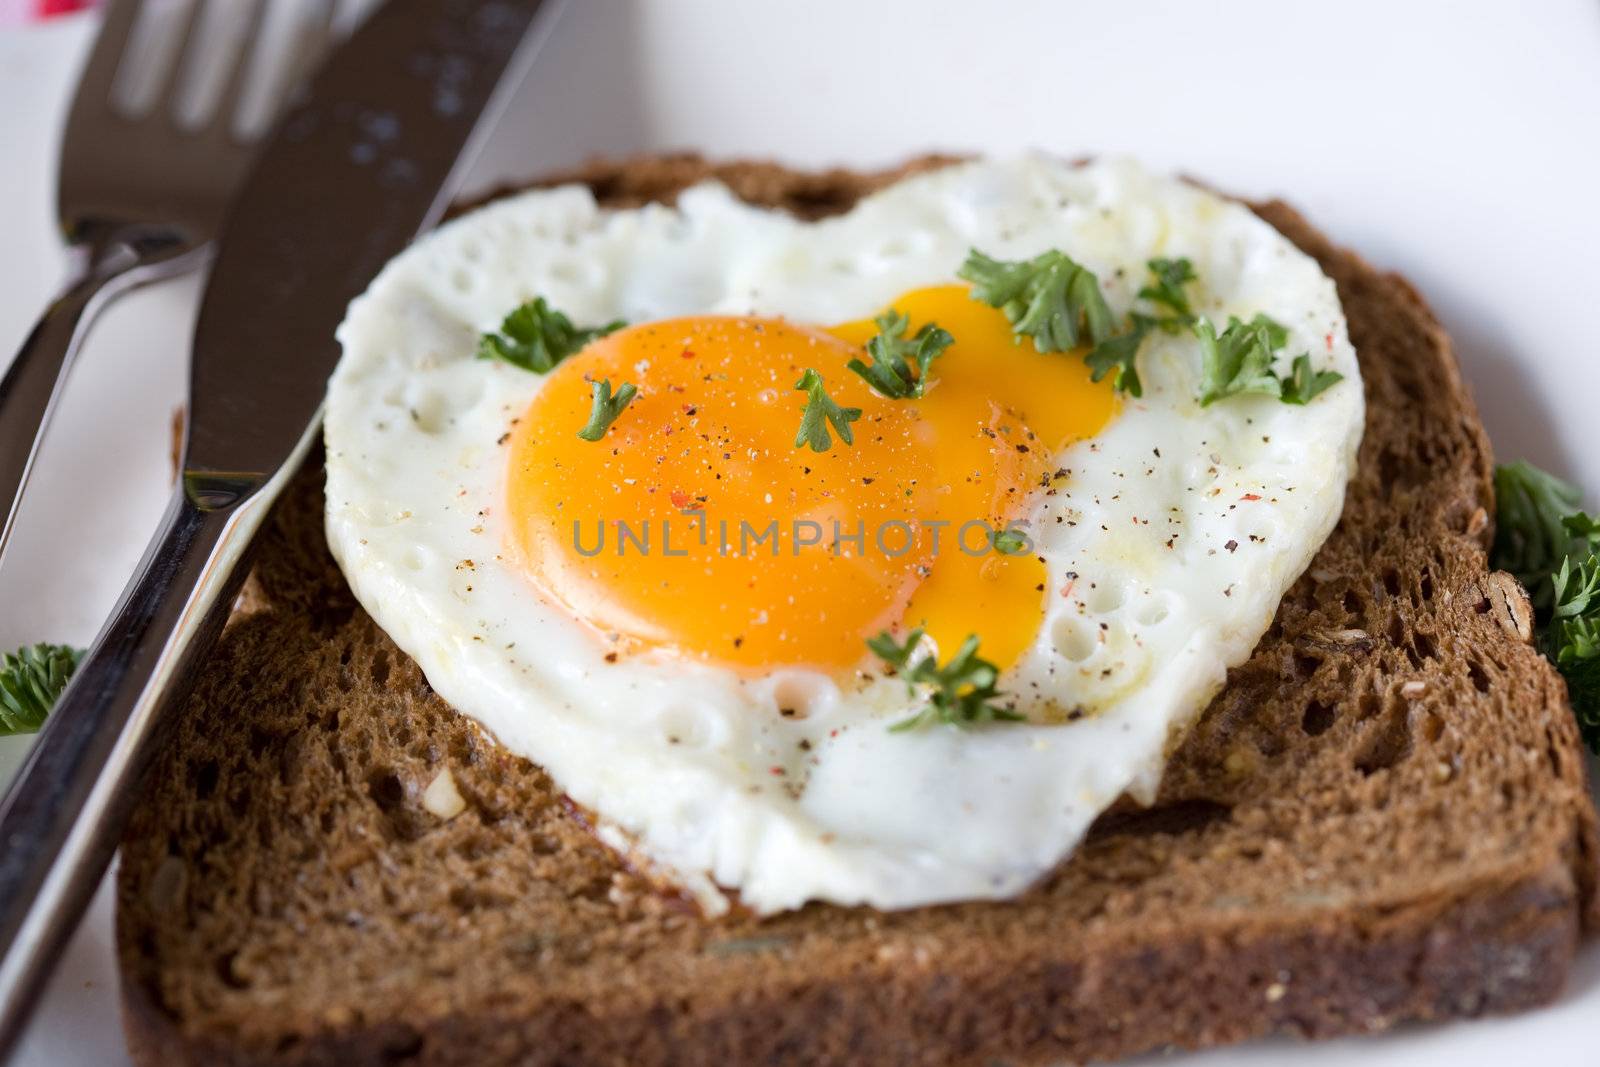 Heart shaped fried egg on a sandwich